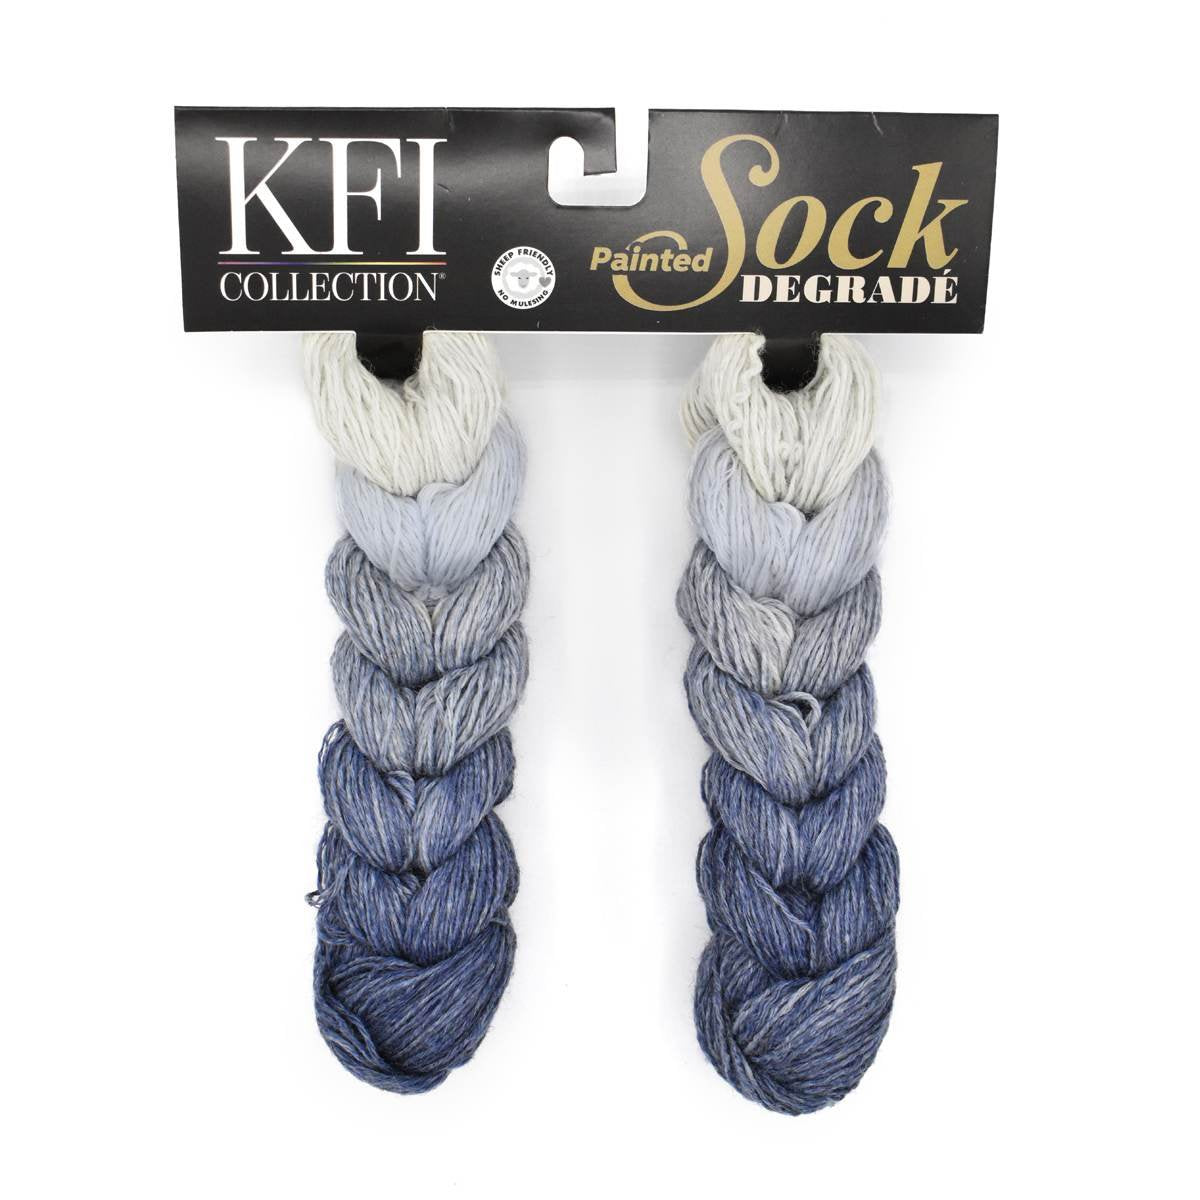 KFI Painted Sock Degrade